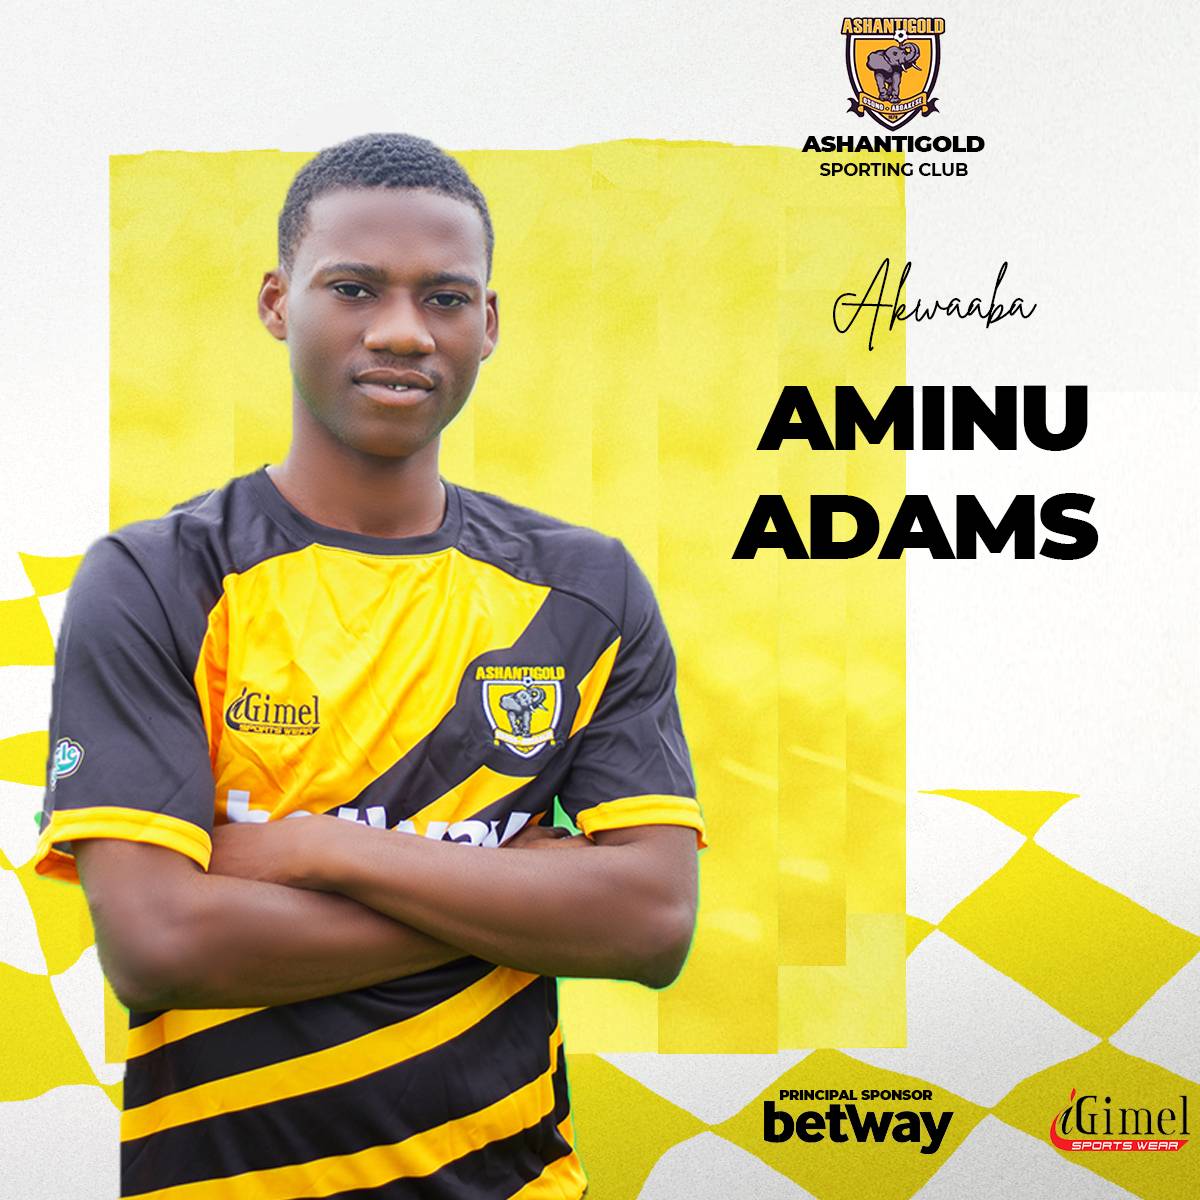 Ashantigold announce the signing of midfielder Aminu Adams